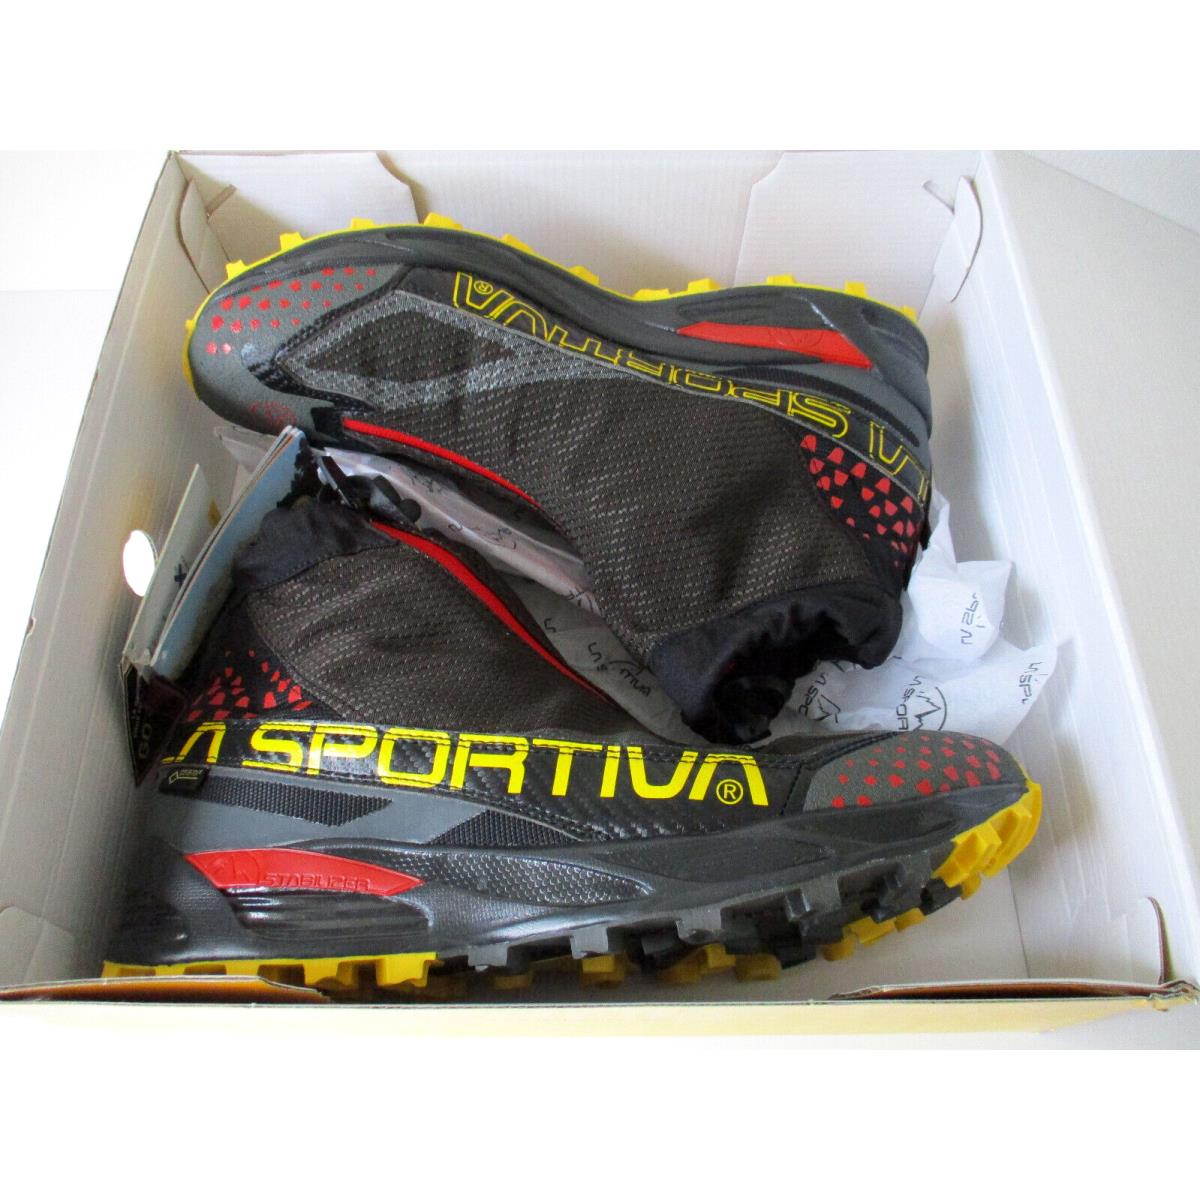 Lasportiva La Sportiva Mens Mountain Running Hiking Shoes Size 12.5 Black Crossover 2.0 Gtx